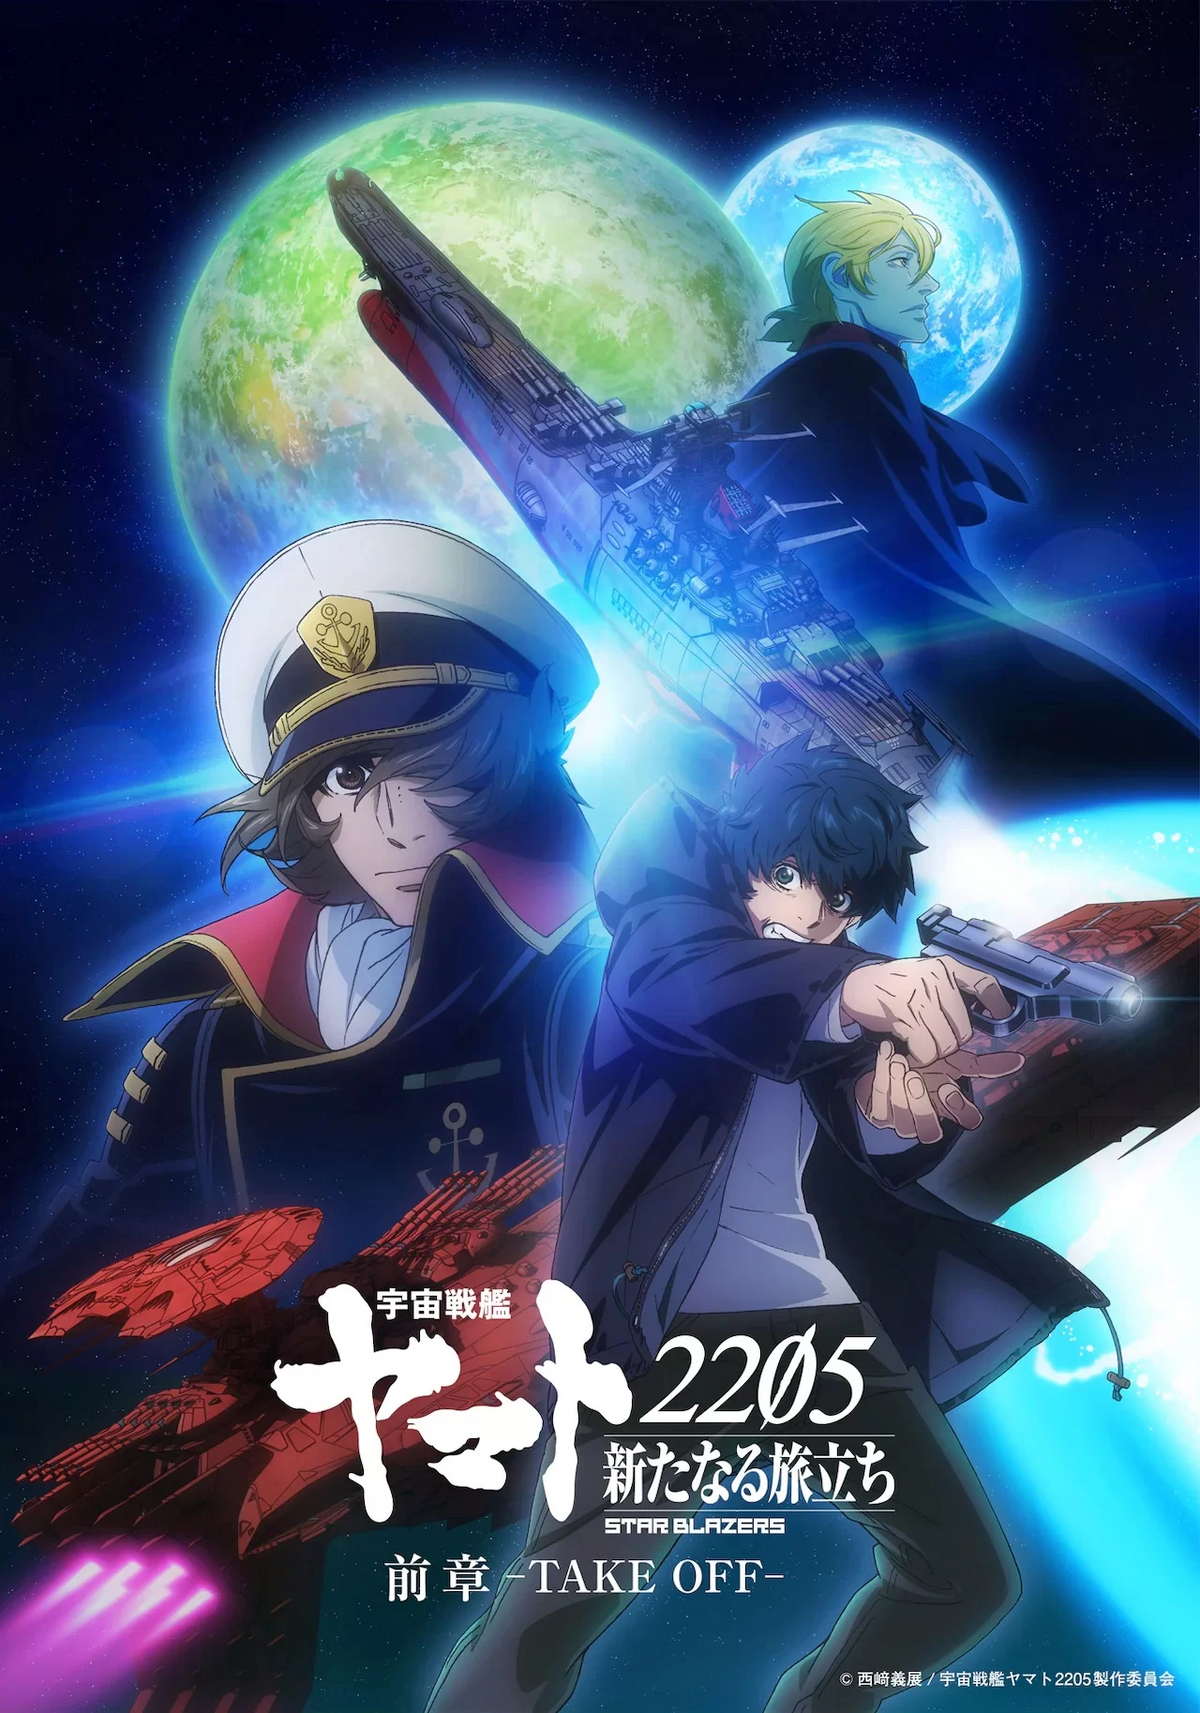 2nd Space Battleship Yamato 2205 Films Trailer Previews Antagonist Meldarz   News  Anime News Network